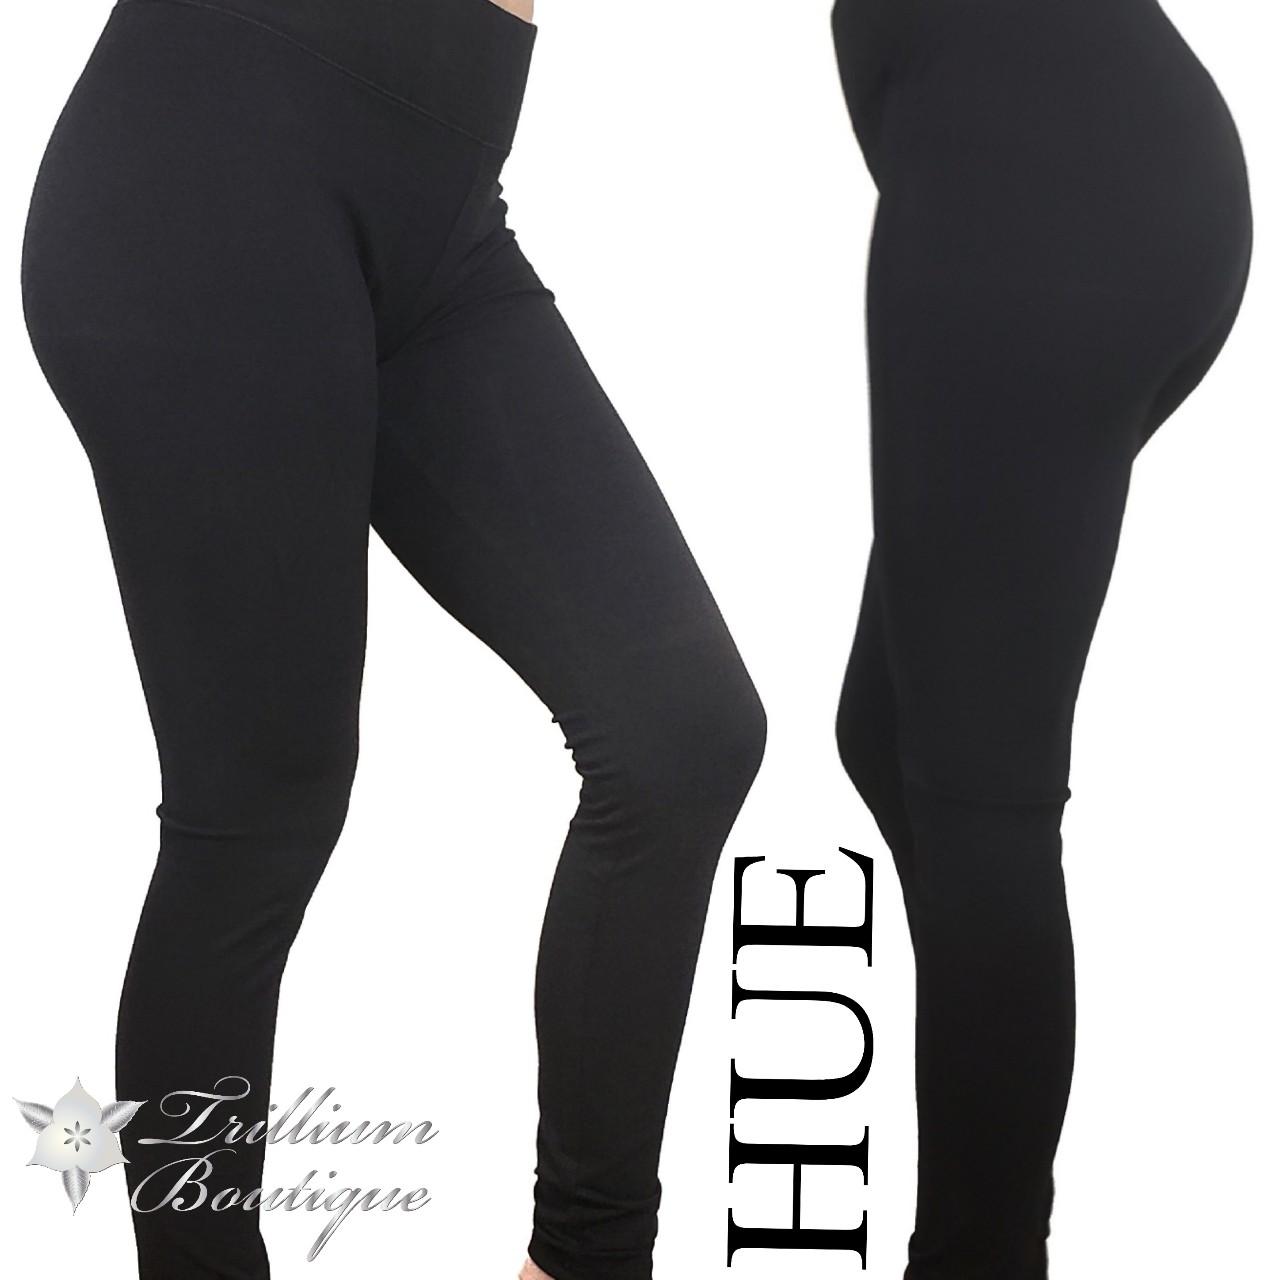 Hue Perfect Fit Cotton Mid-Rise Leggings 2 Pack 🛍 - Depop